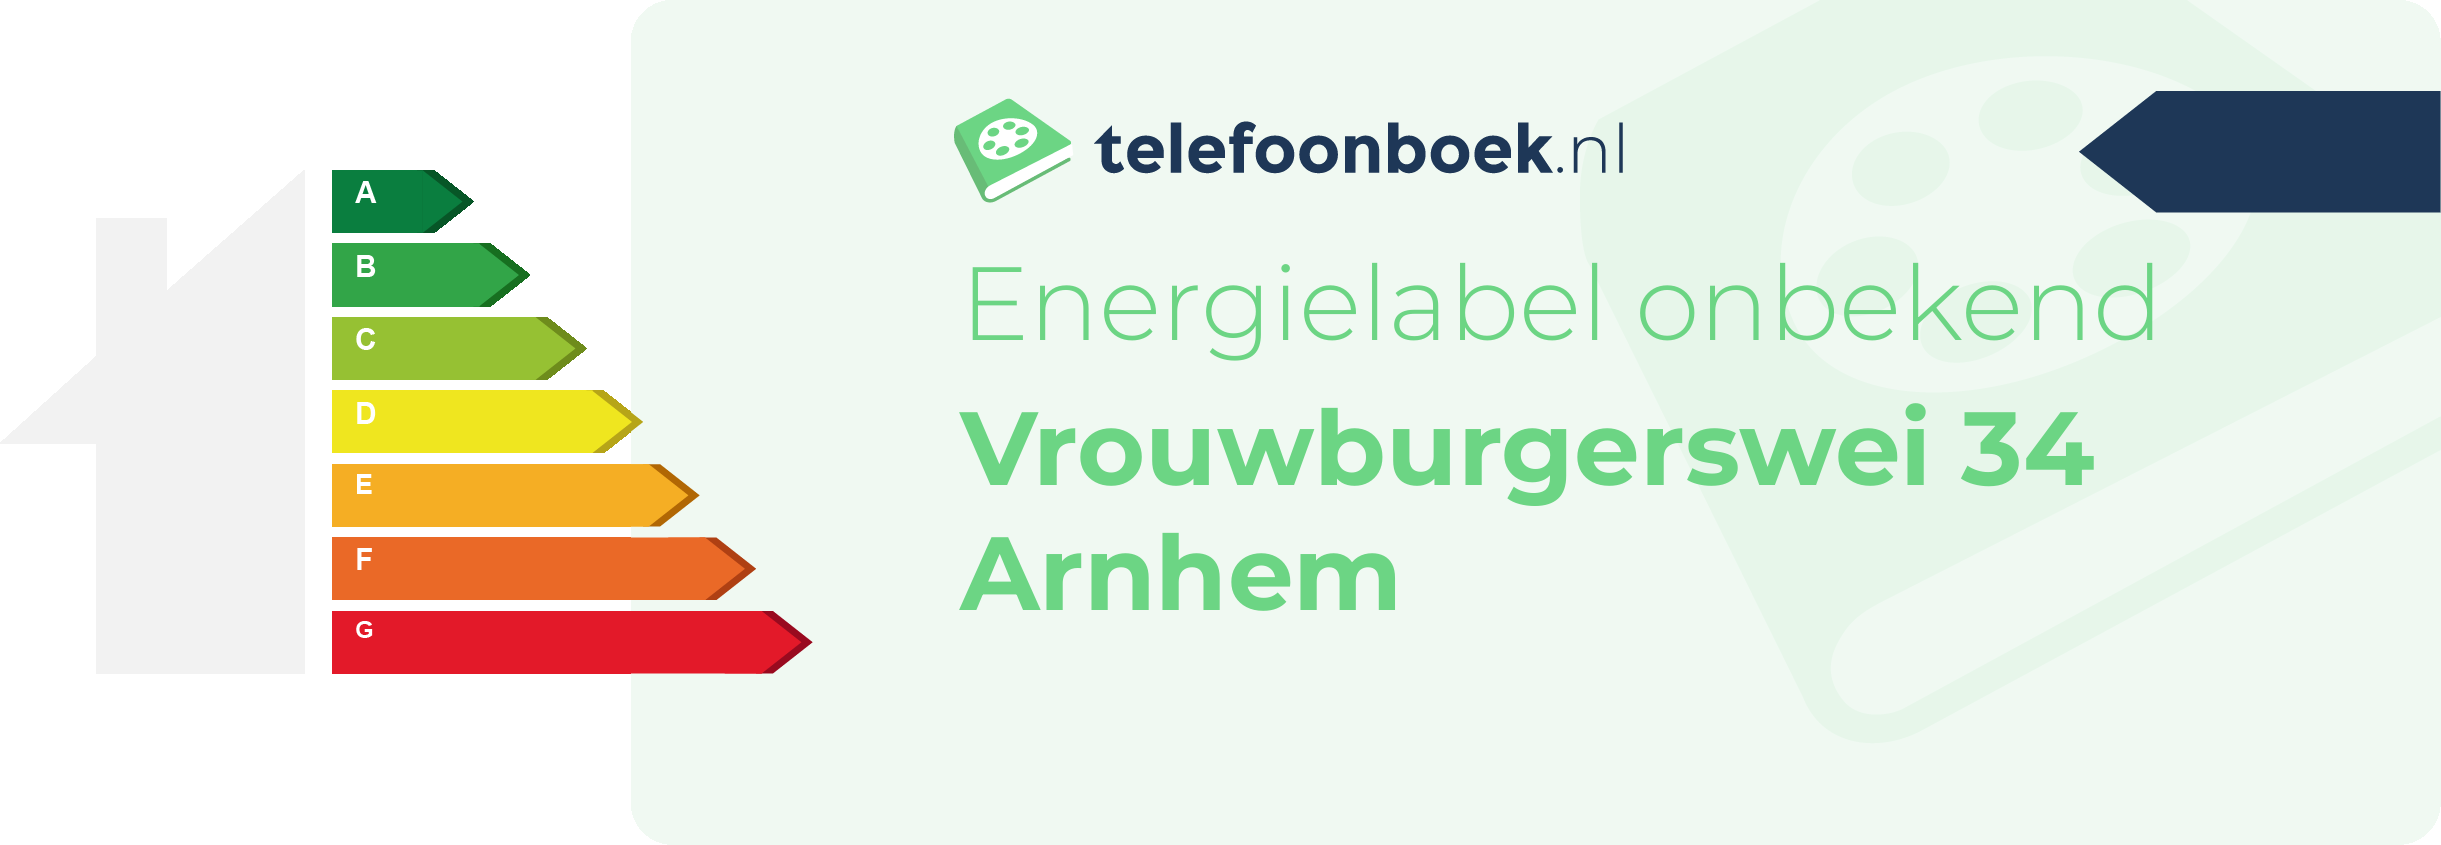 Energielabel Vrouwburgerswei 34 Arnhem